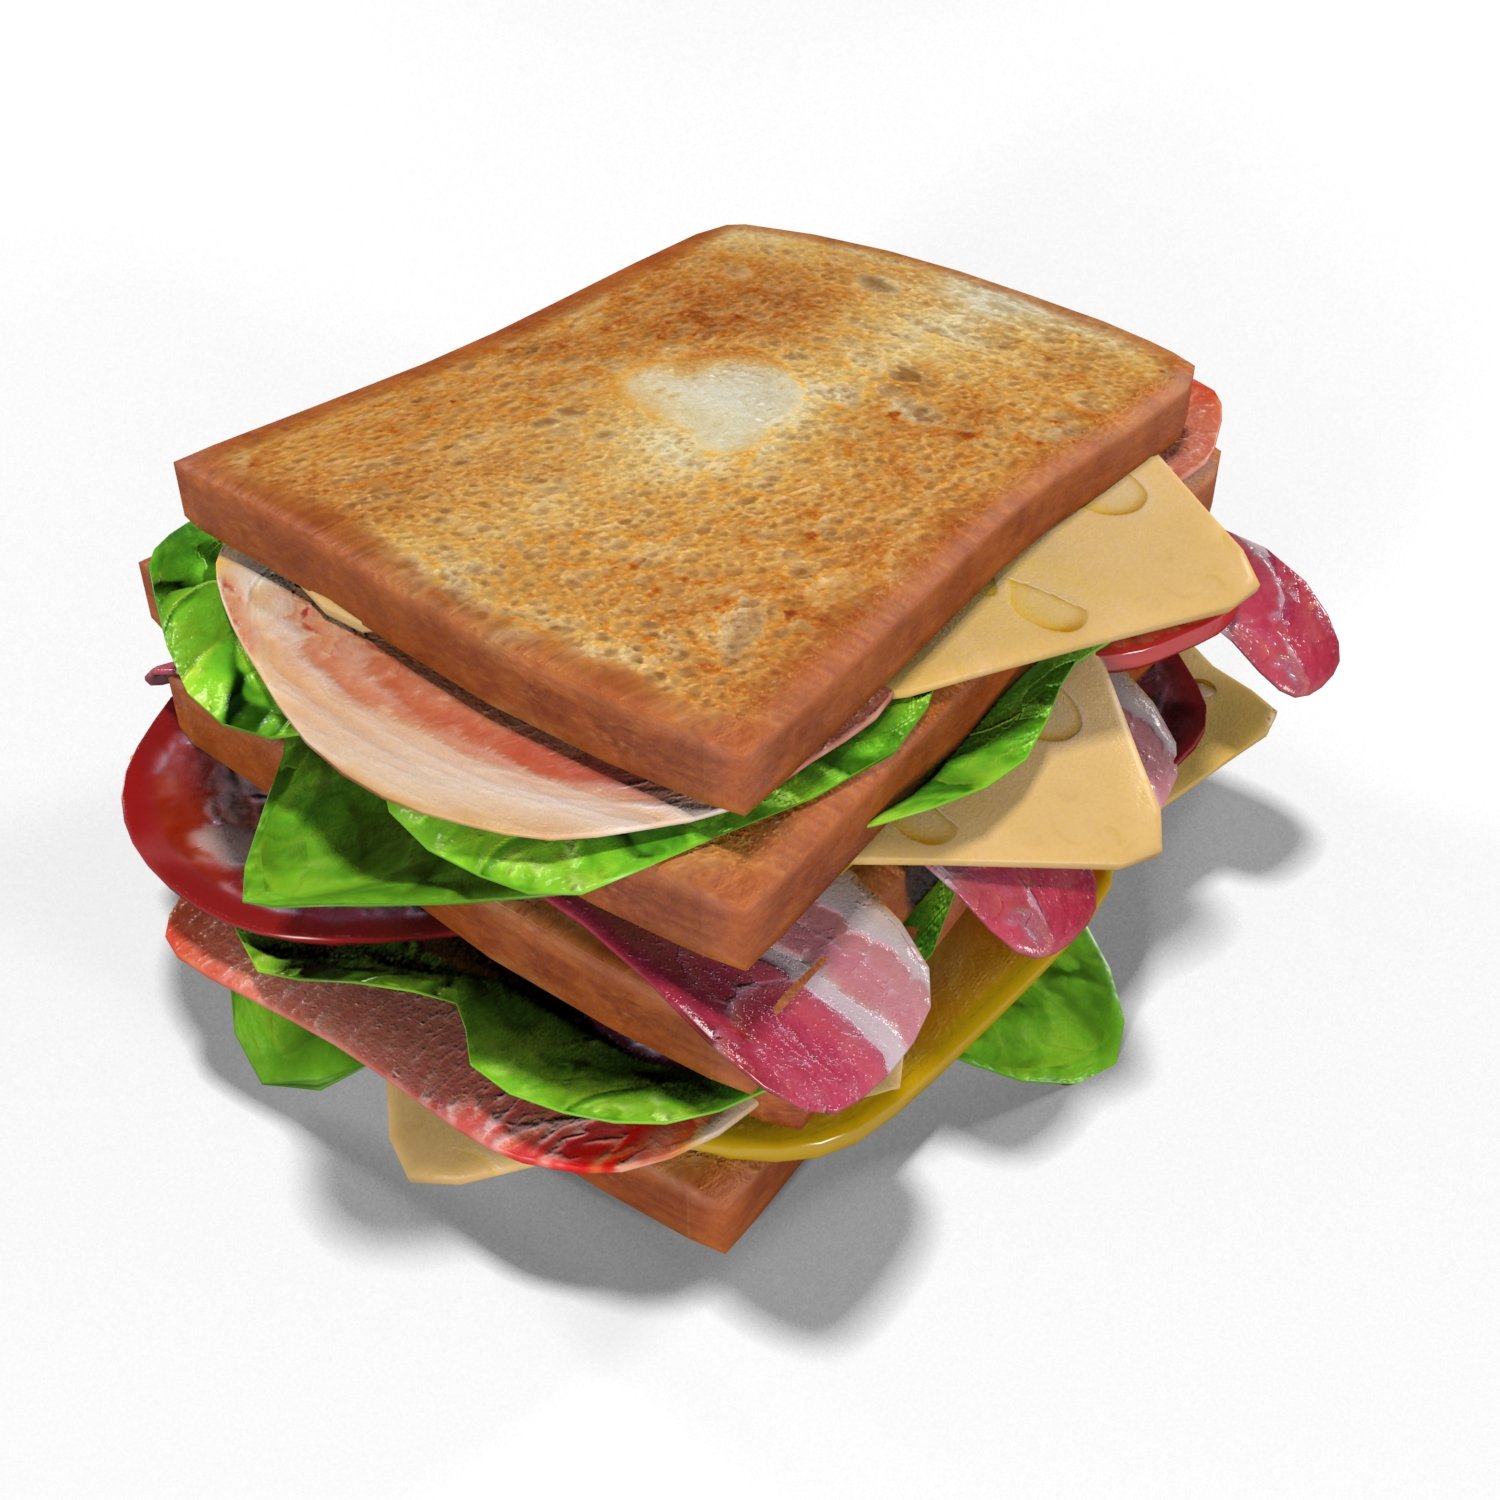 6,540 Sandwich Counter Images, Stock Photos, 3D objects, & Vectors